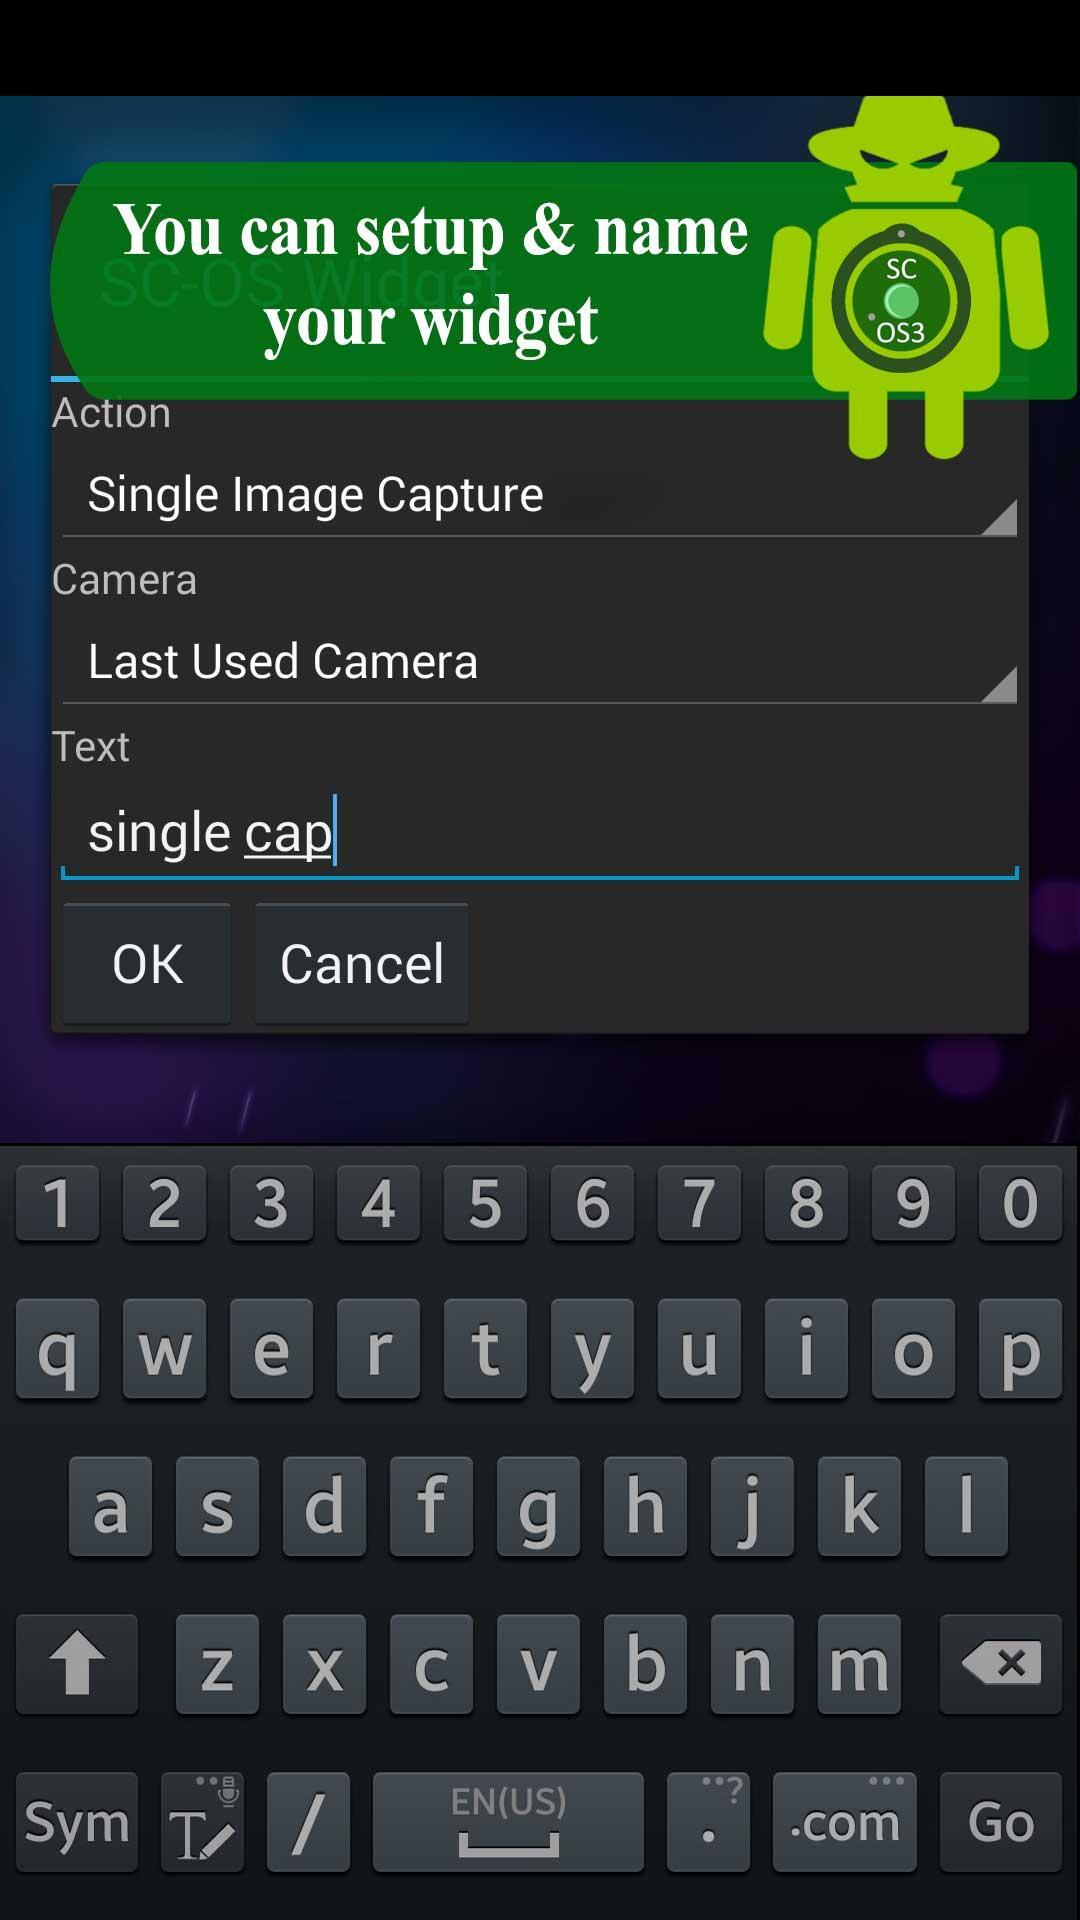 Spy Camera OS 3 (SC-OS3) for Android - APK Download